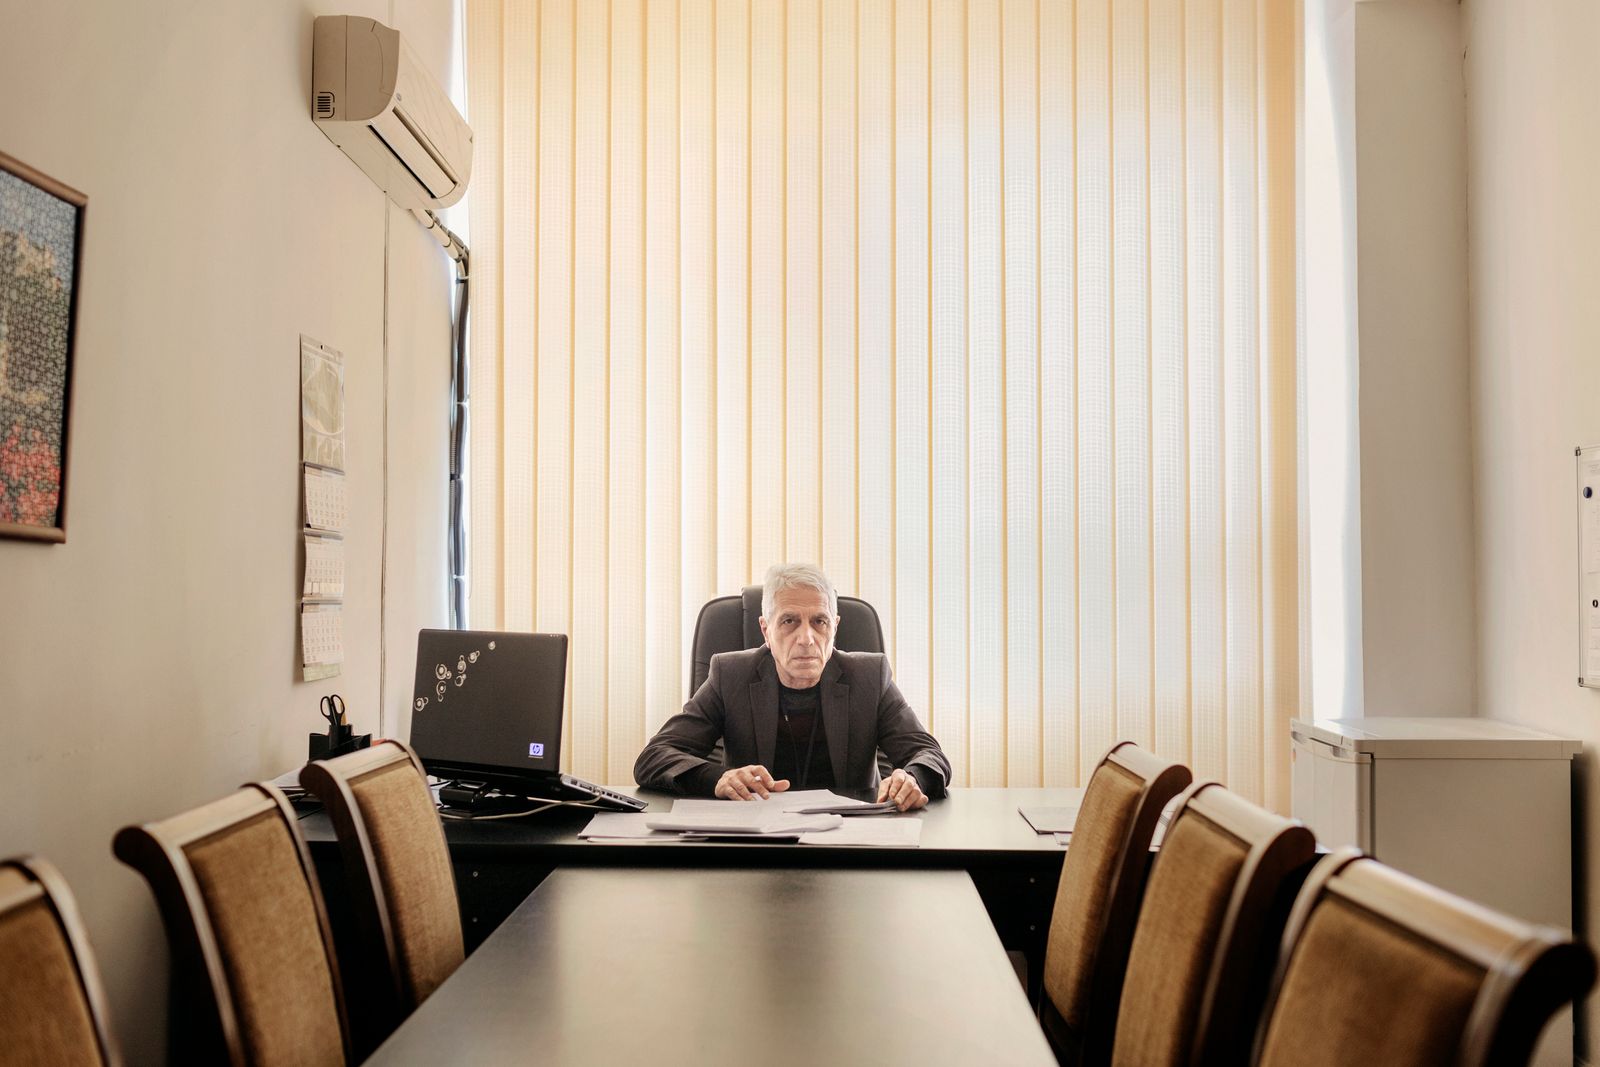 © Stefano Morelli - Metsamor, Armenia Chief engineer Ashot Ordubekyan is seen in his office inside the nuclear plant.